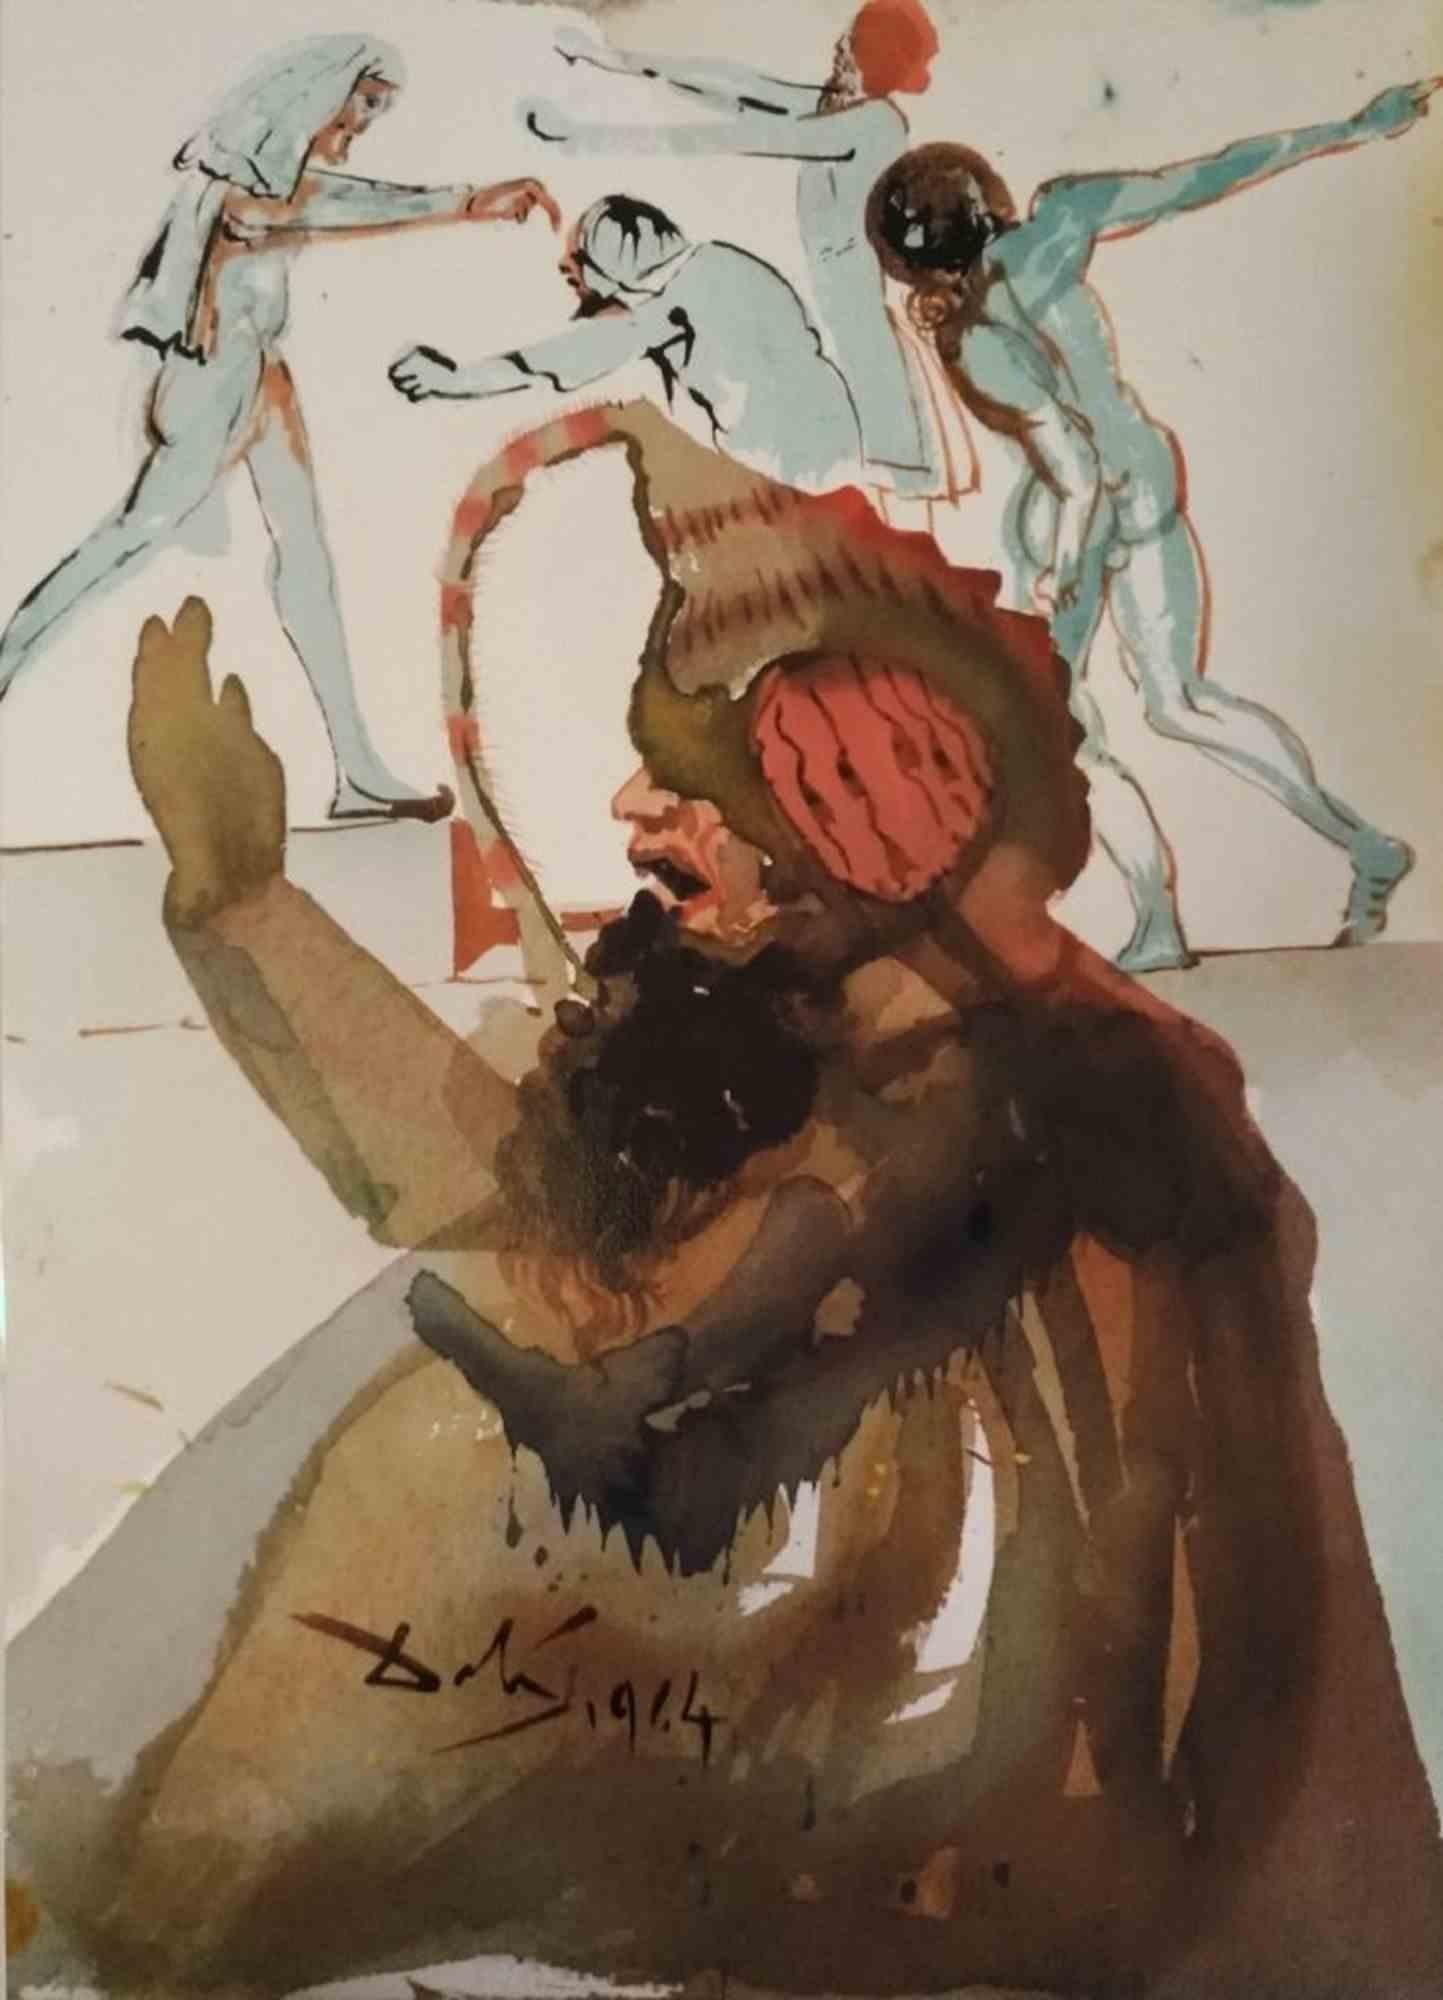 Salvador Dalí Figurative Print - Joseph et fratres in Aegypto  - Lithograph - 1964